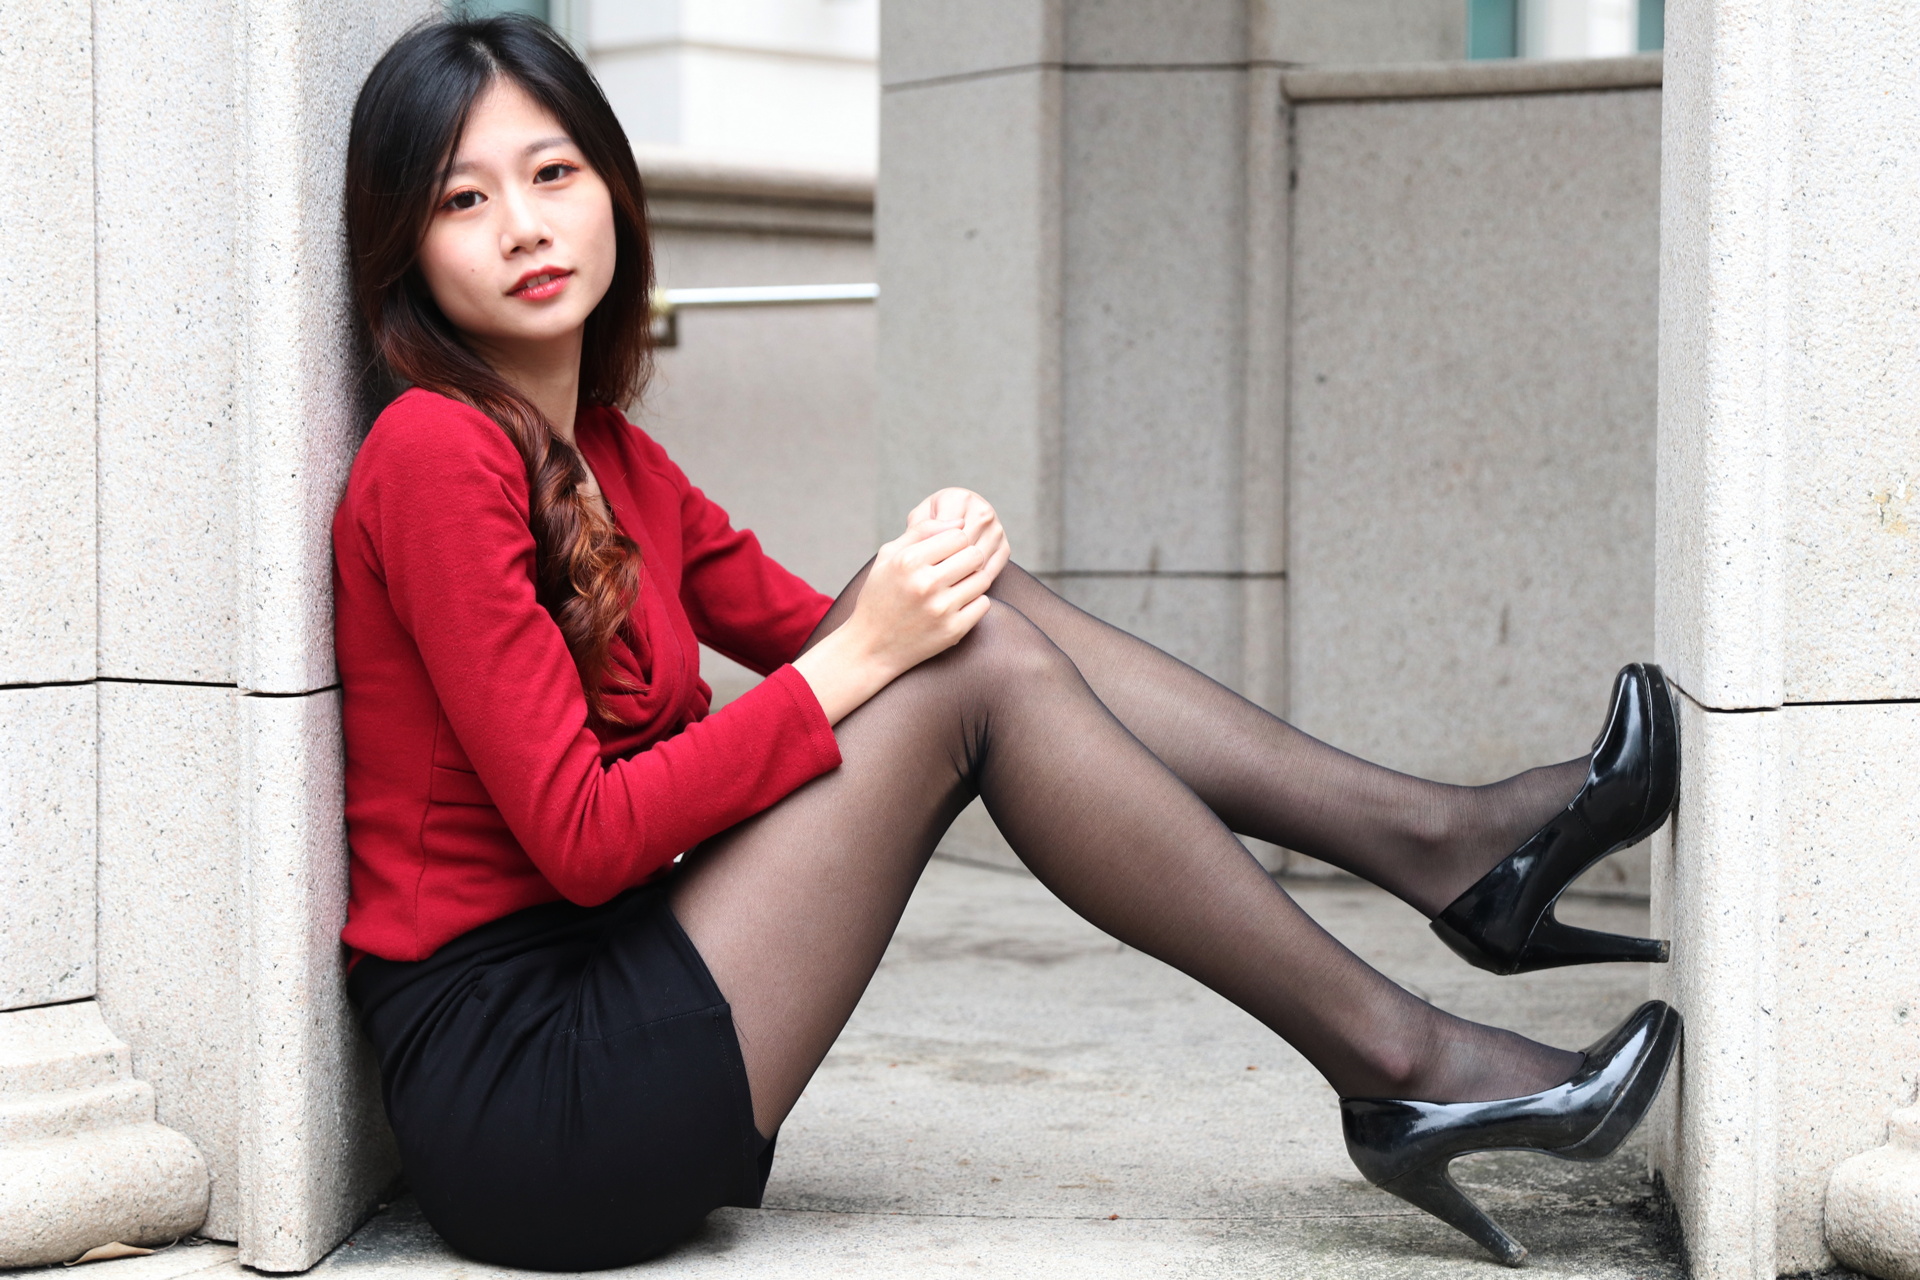 Asian Model Women Long Hair Dark Hair Sitting Nylons Heels Wallpaper Resolution 1920x1280 Id